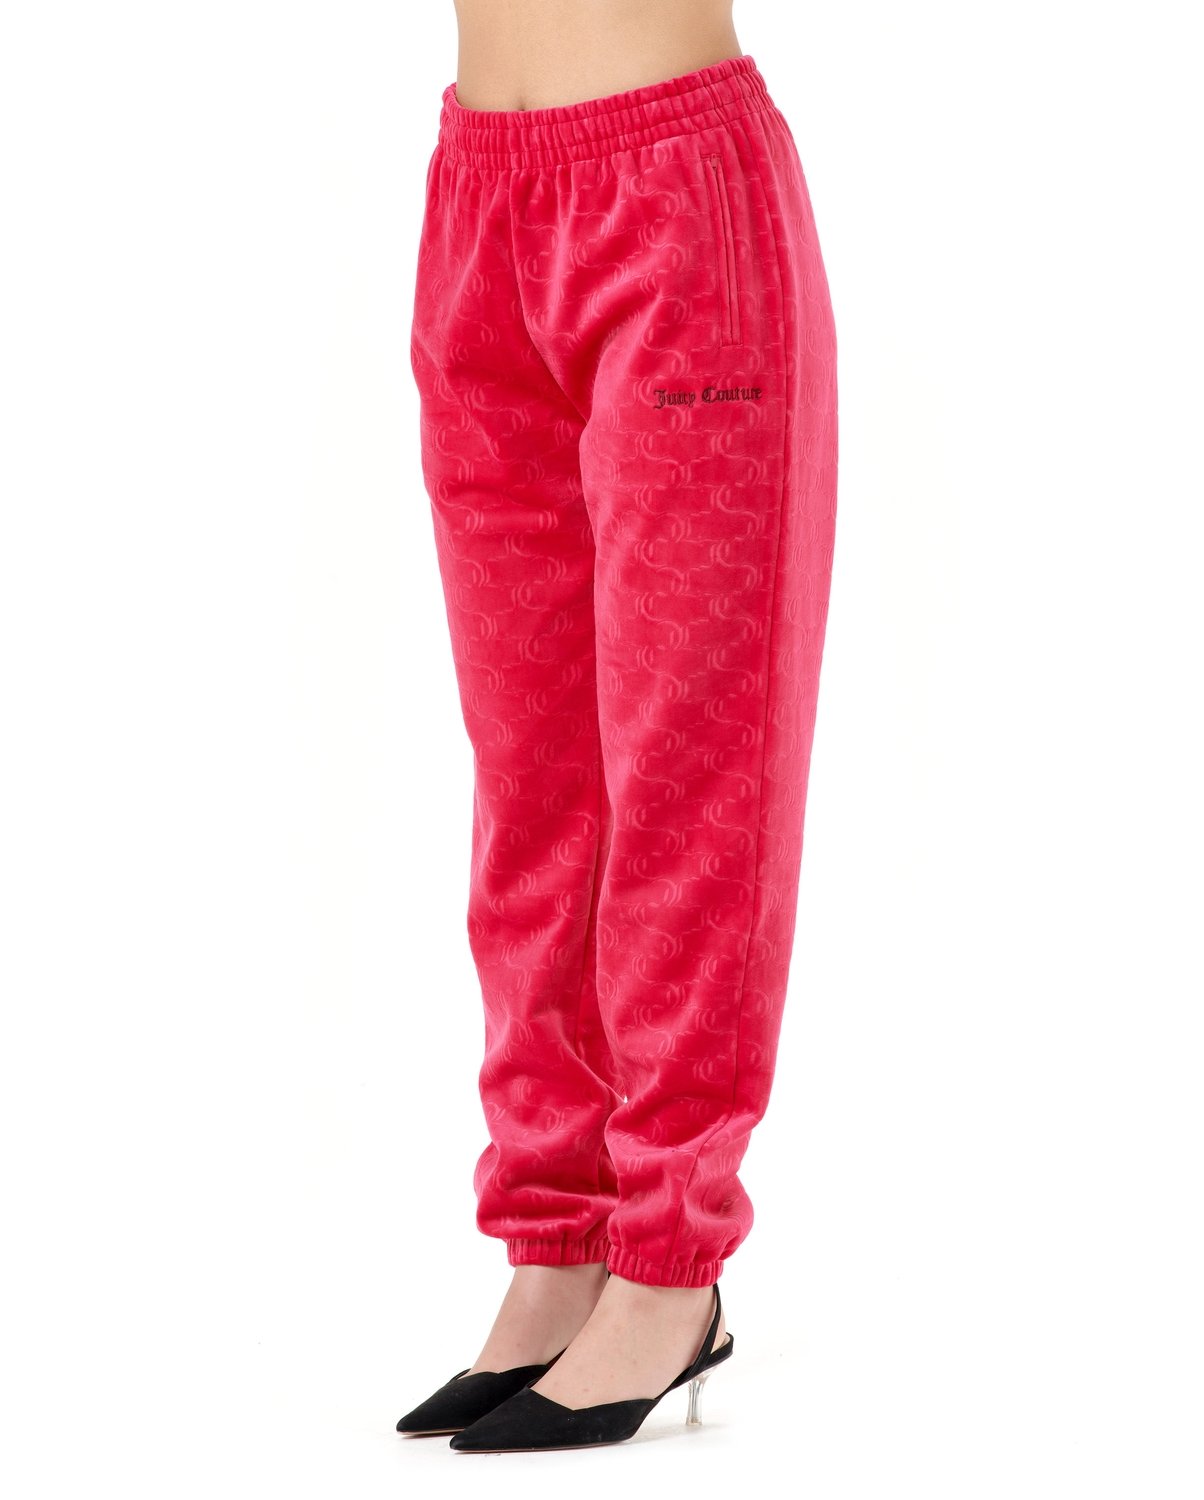 Juicy Couture велюровые штаны 2012 года. Juicy Couture брюки велюровые хлопковые. Juicy Couture шелковые брюки. Джуси Кутюр велюровые брюки. Куплю велюровые брюки